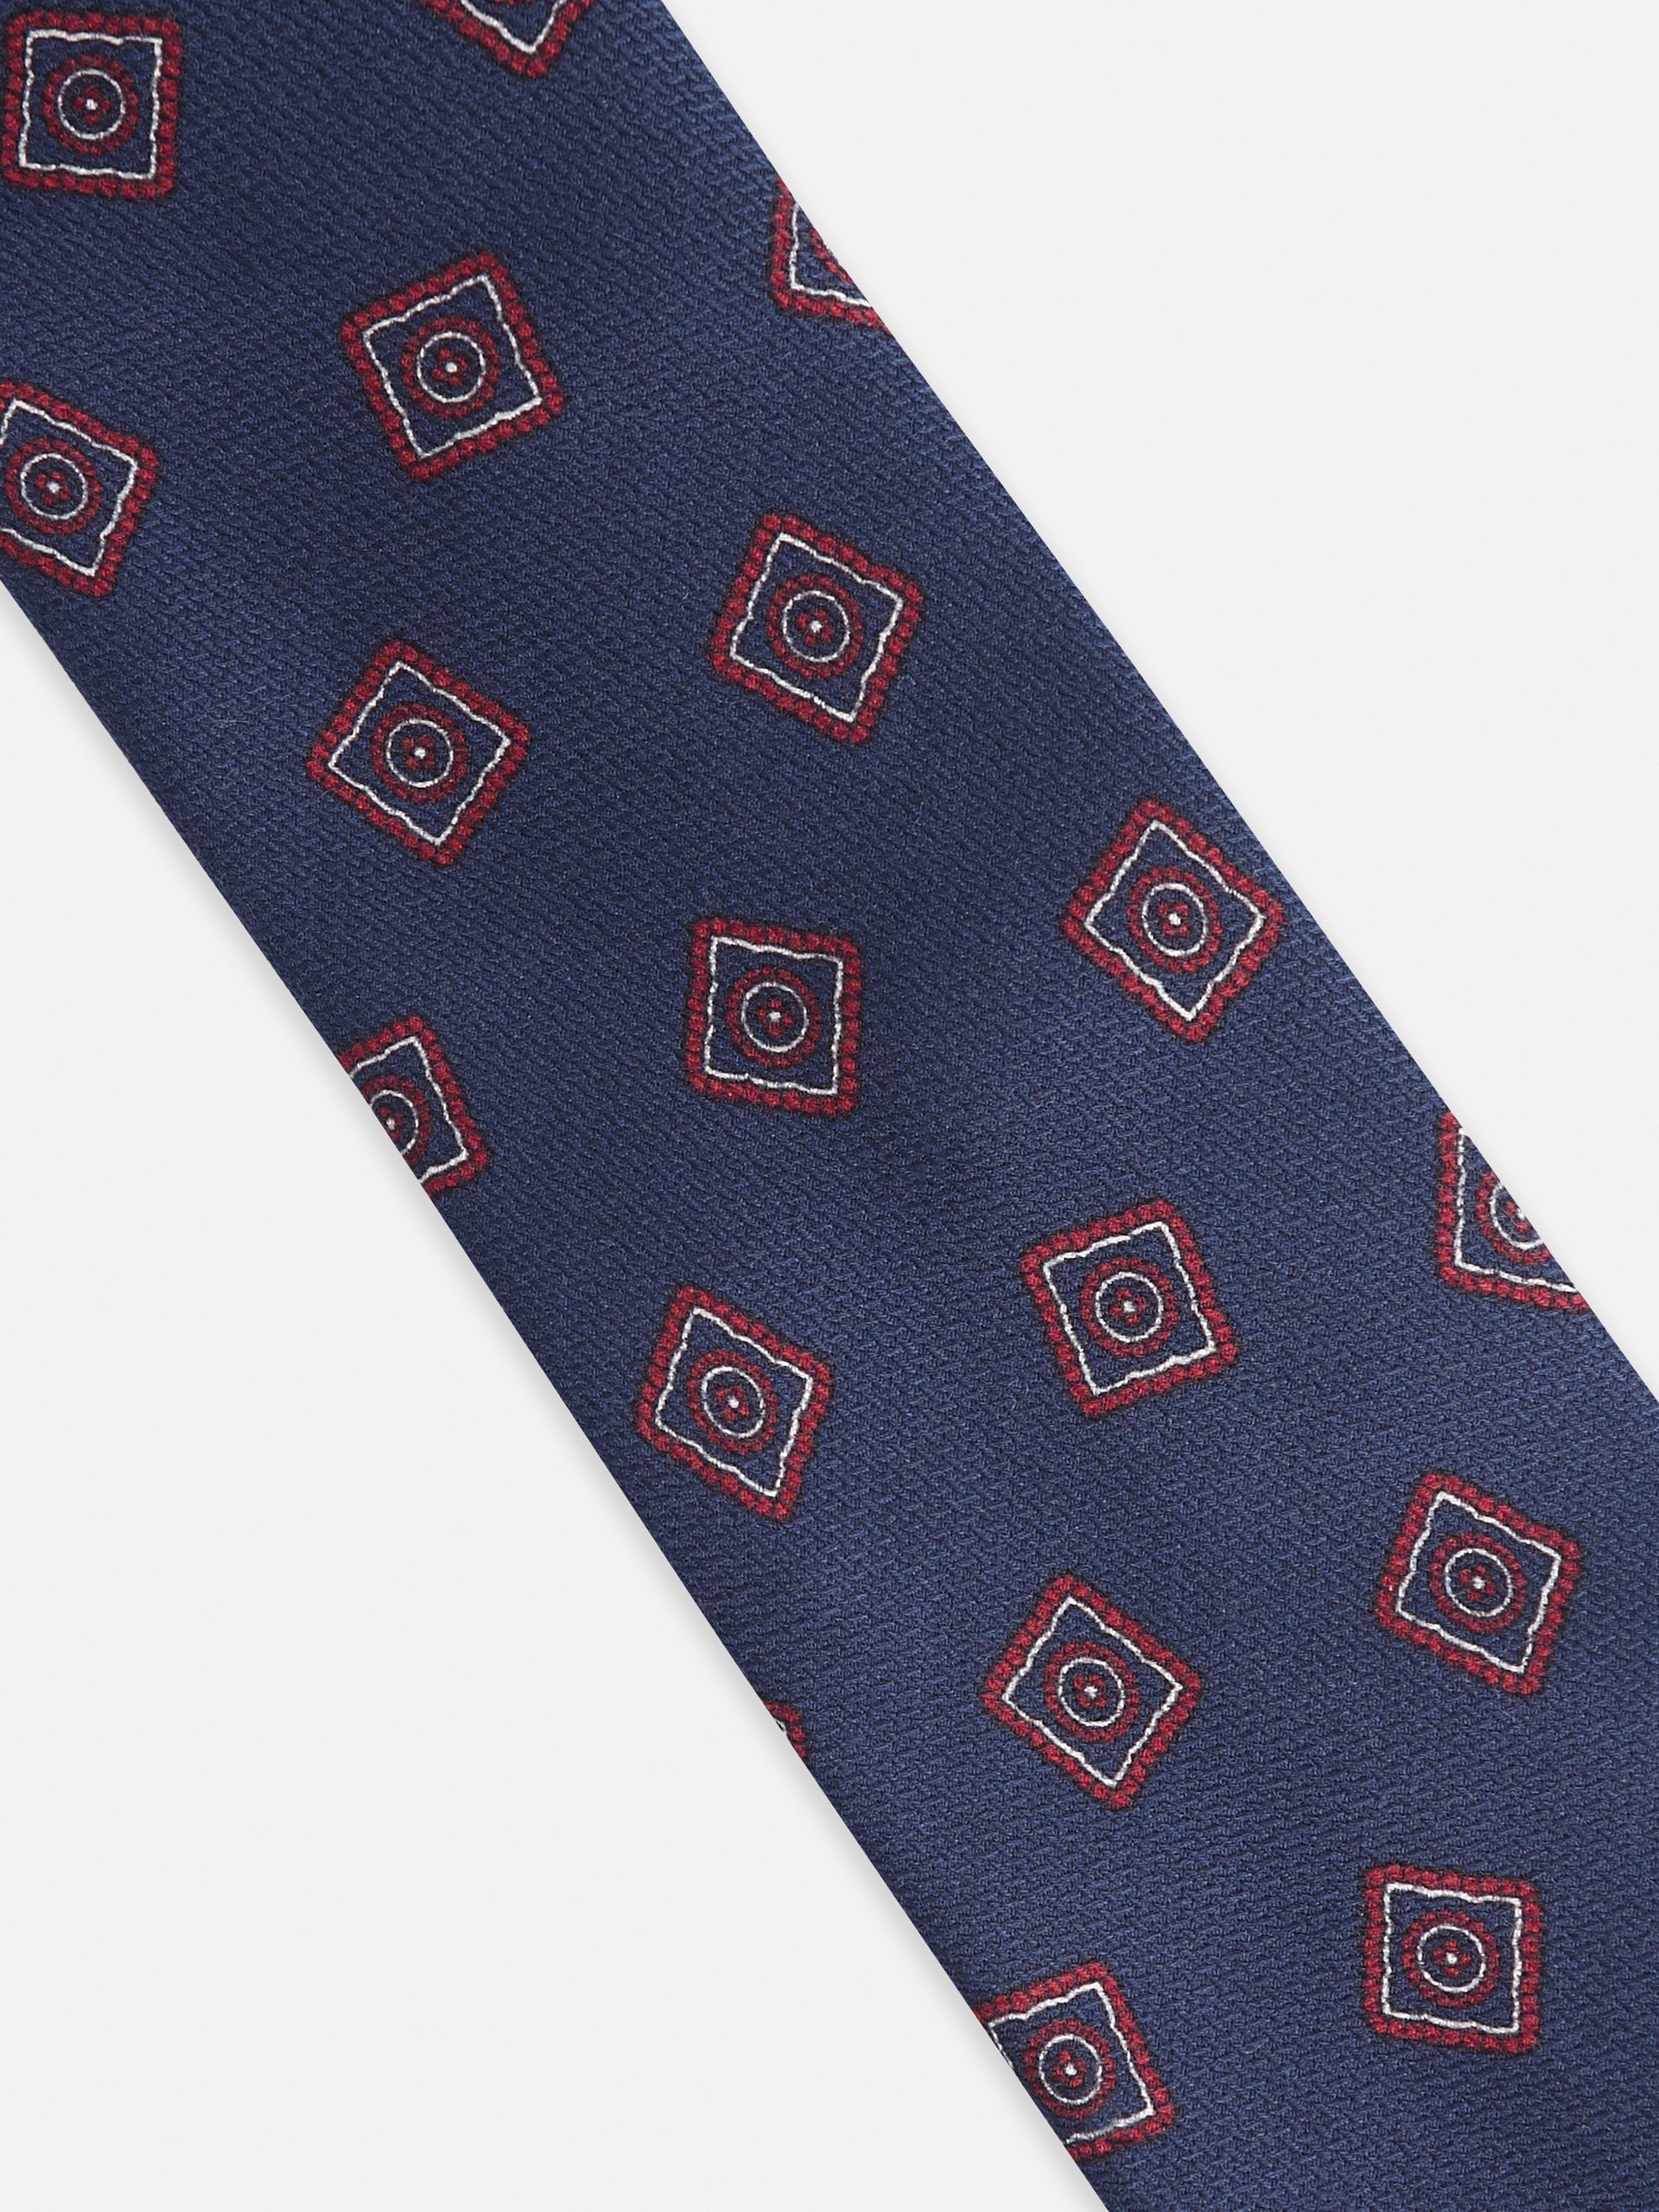 Navy blue irregular print tie